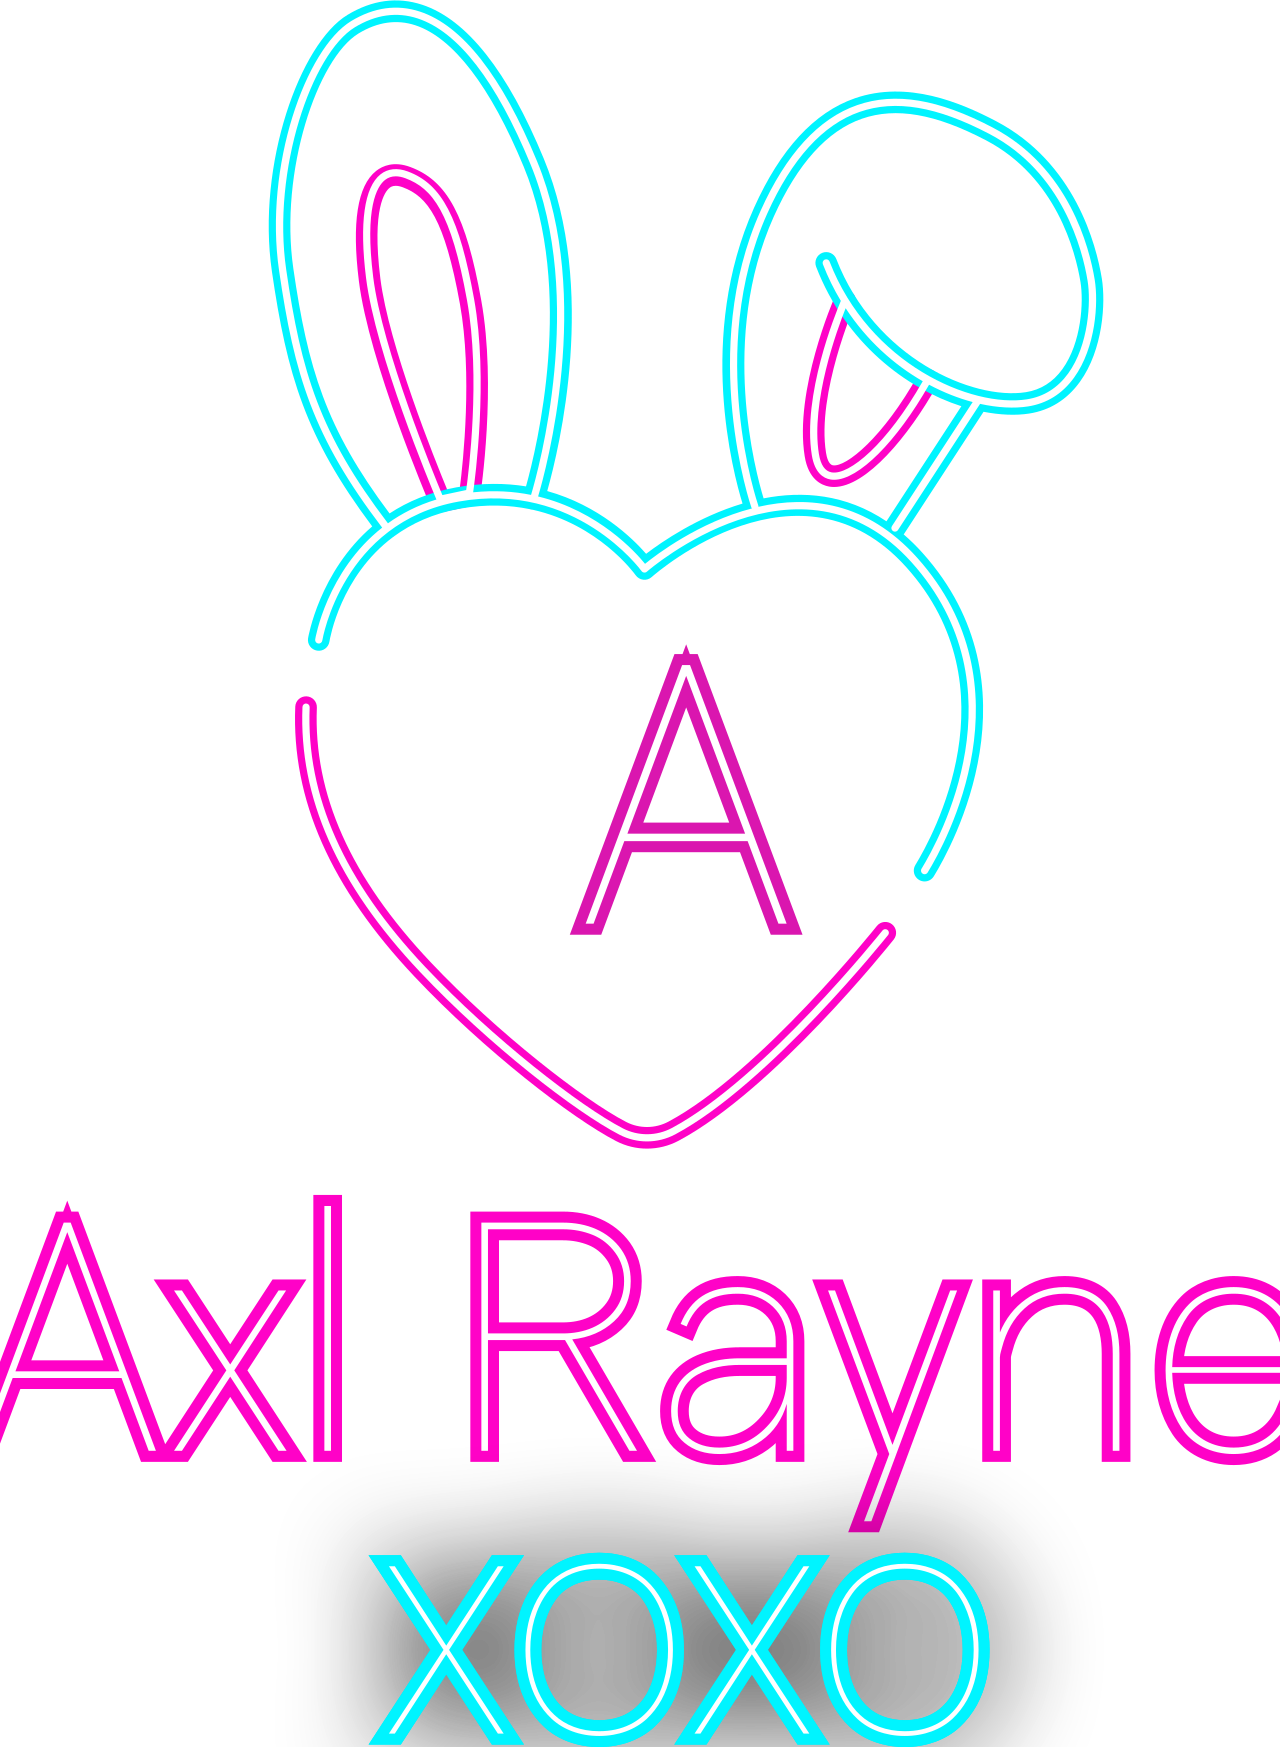 Axl Rayne 's web page